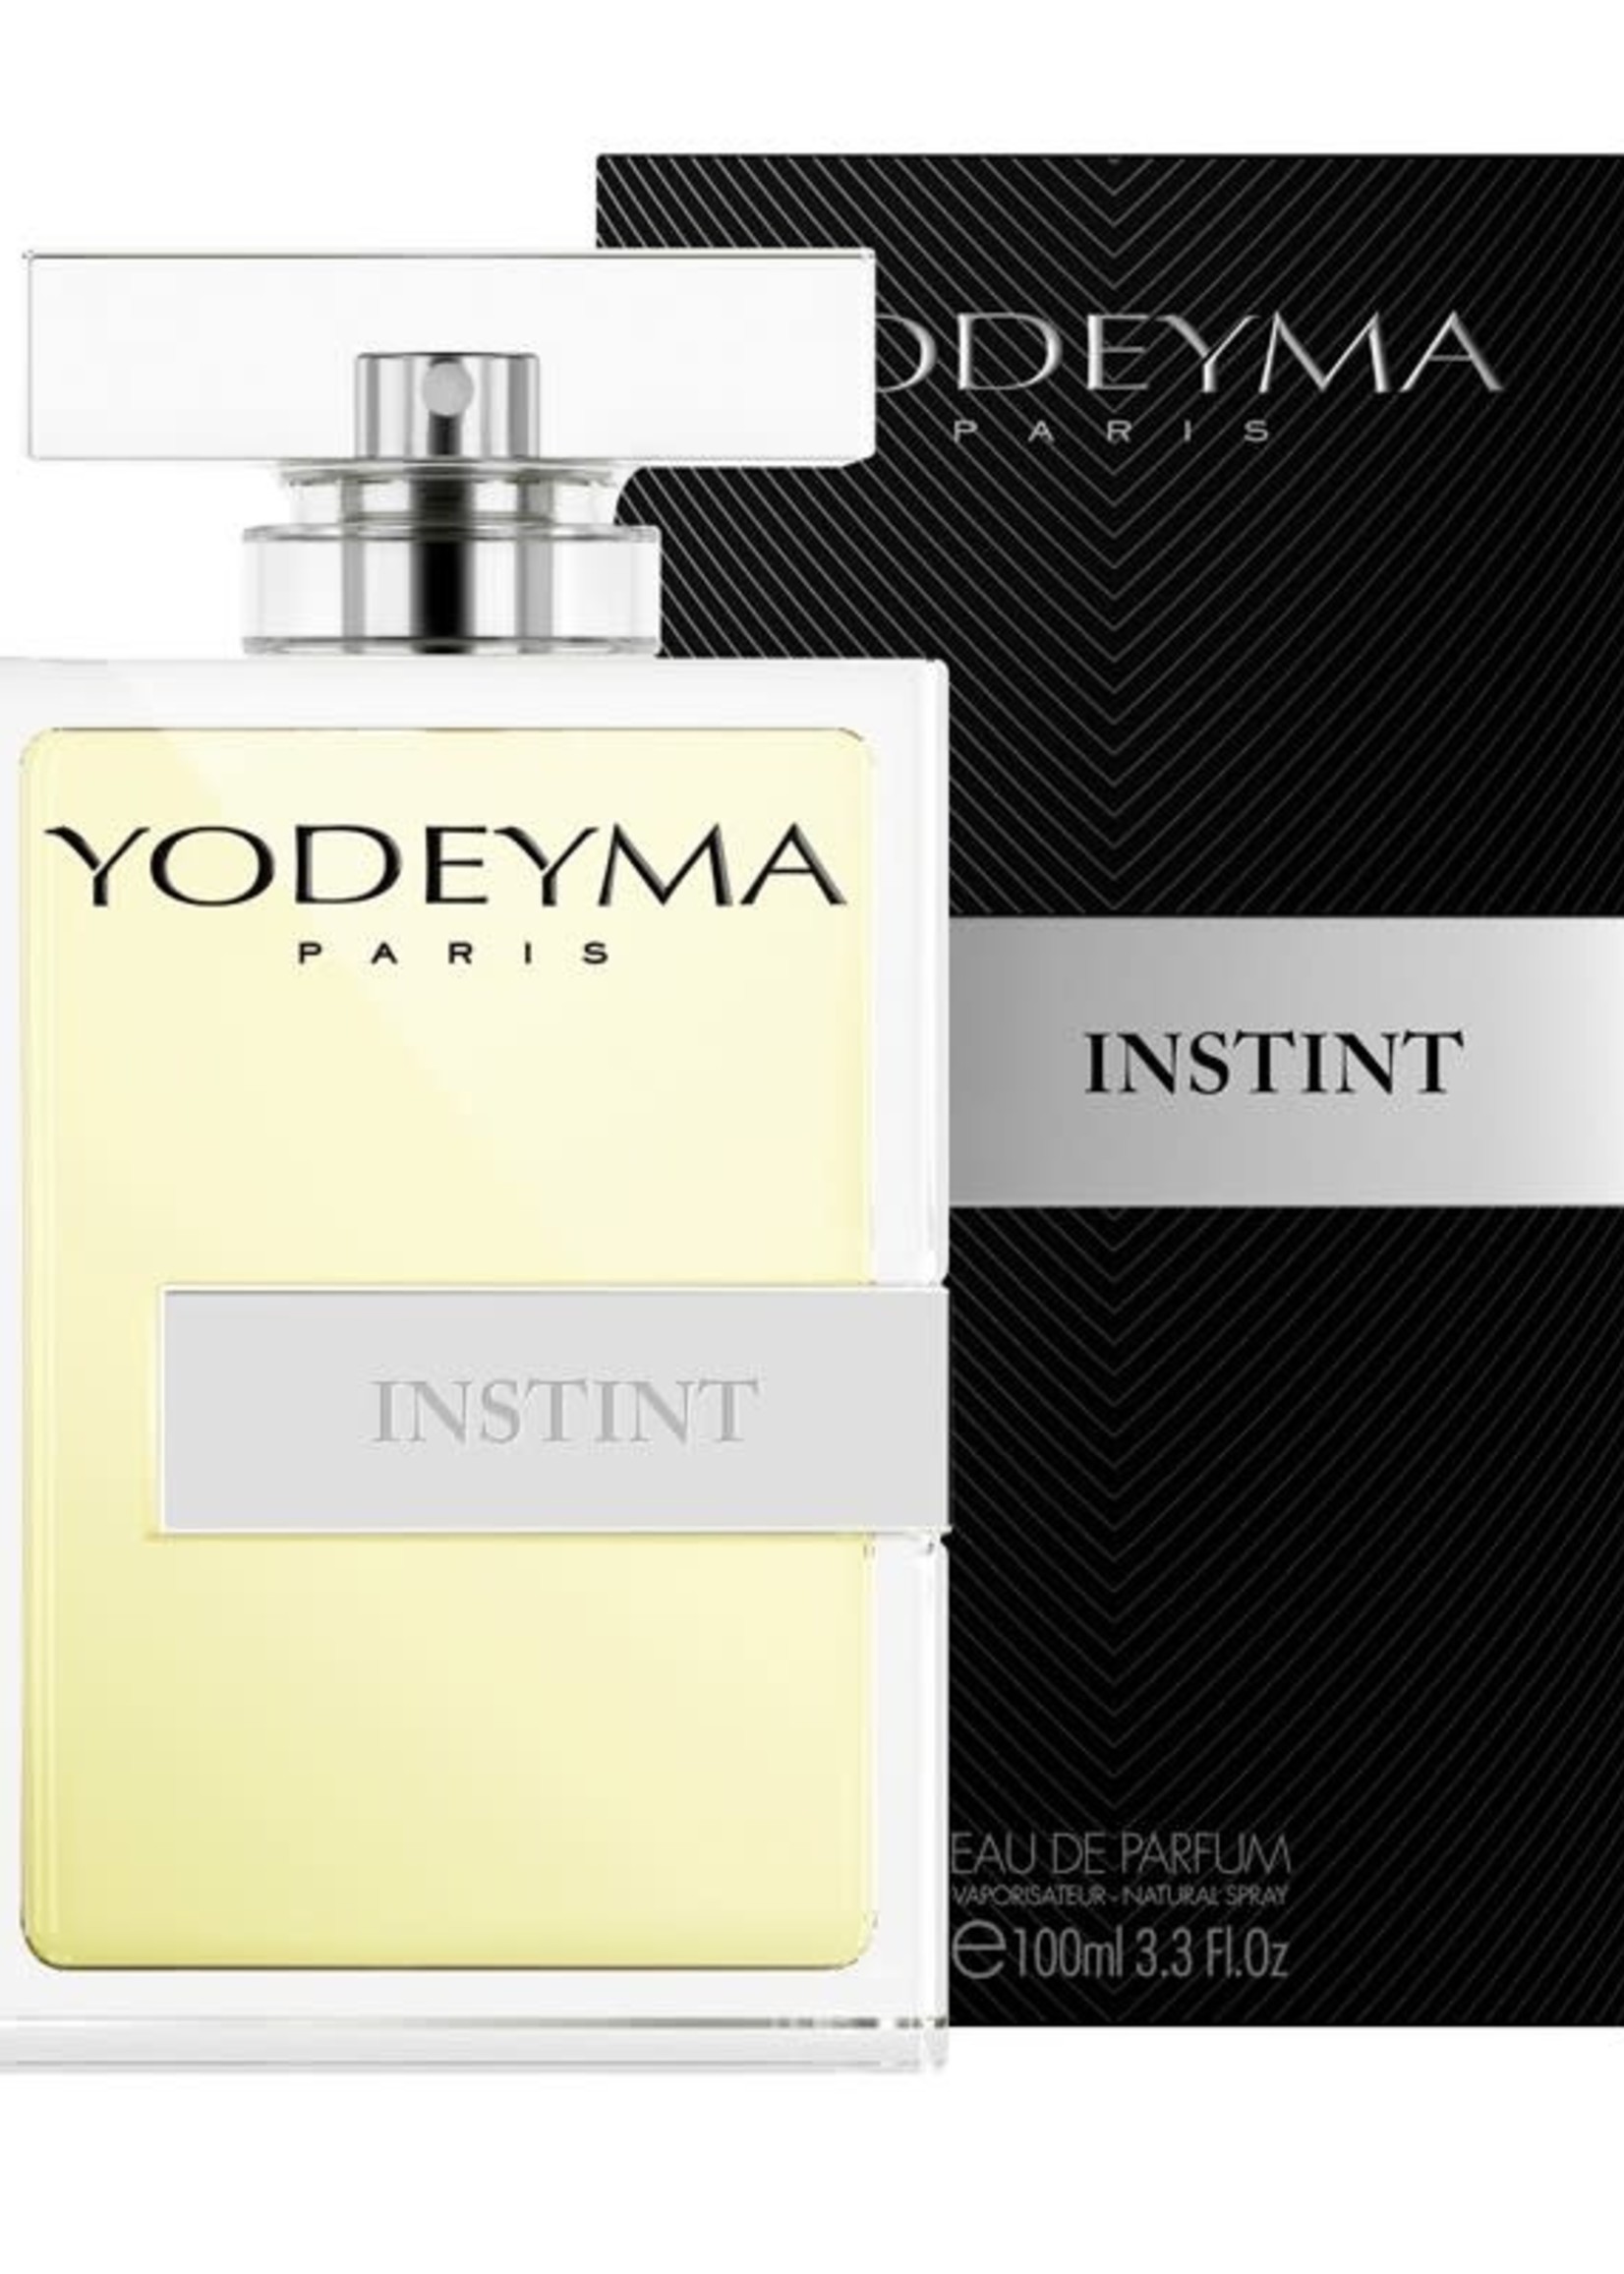 Yodeyma Paris Parfum Yodeyma Paris Parfum Instint - 100 ml